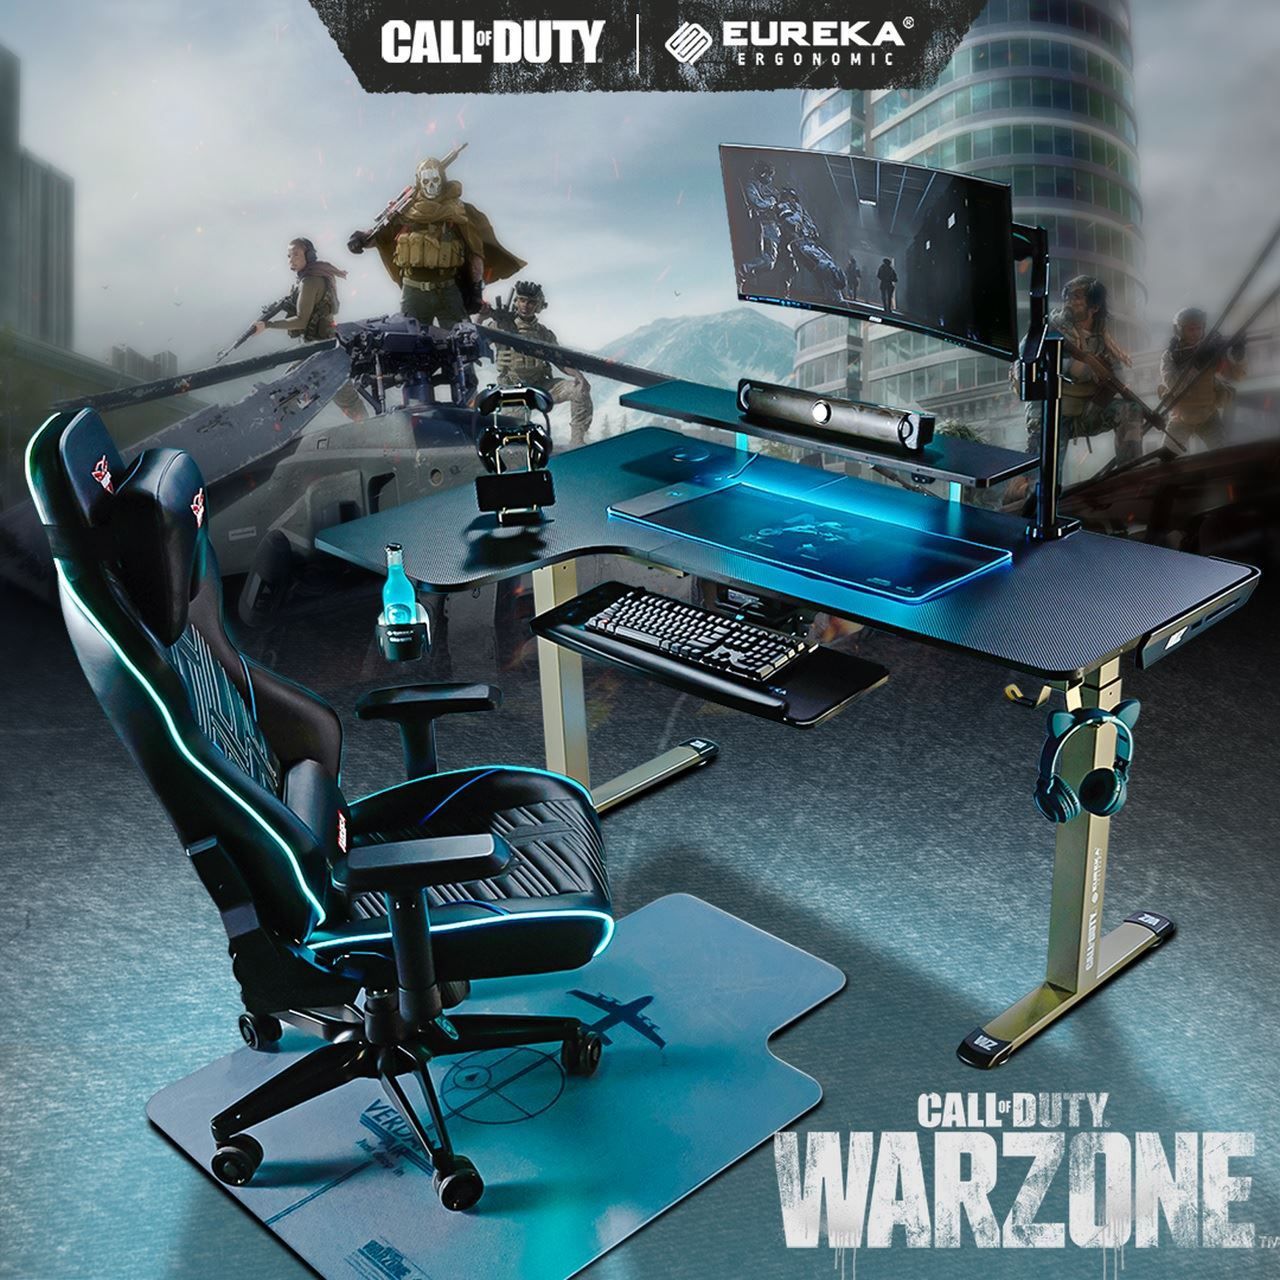 Eureka Ergonomic Gaming Chair- Call of Duty Series, Warzone Red